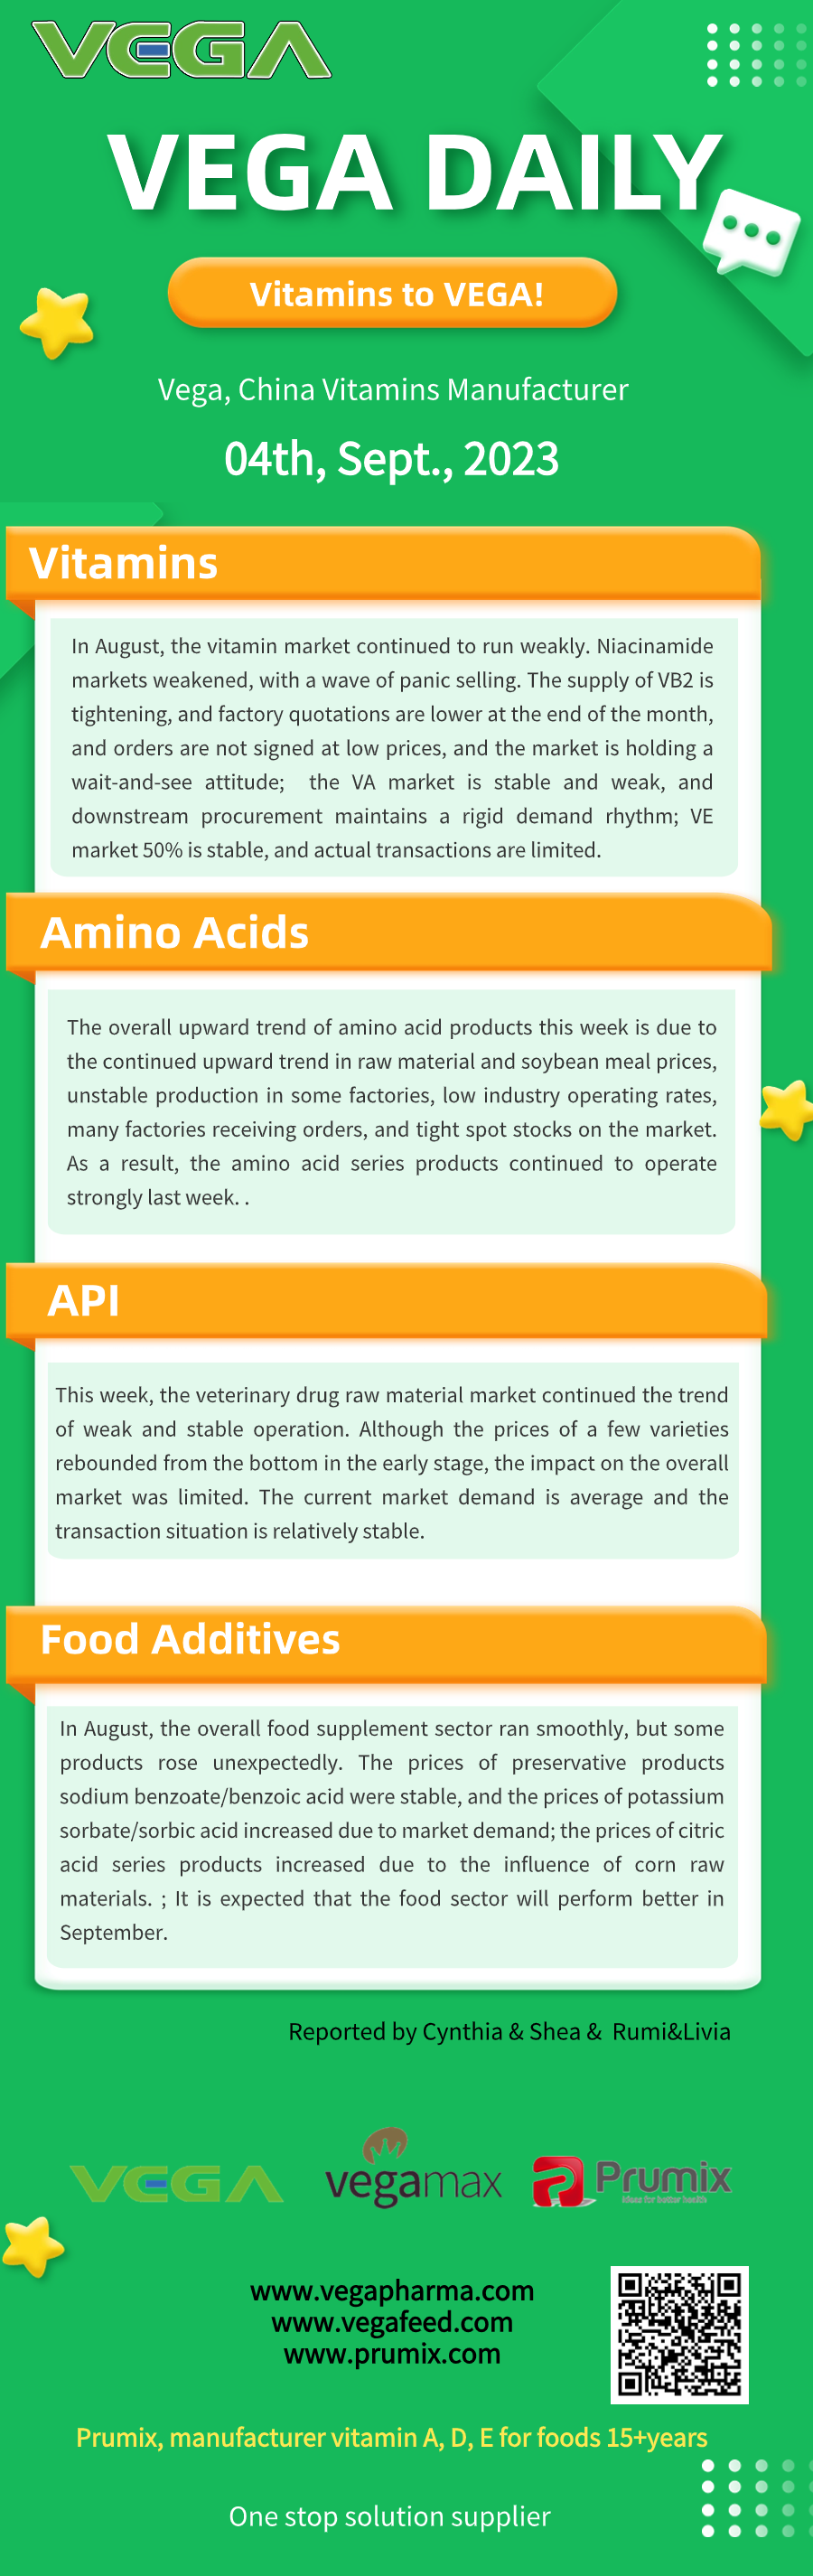 Vega Daily Dated on Sept 4th 2023 Vitamin  Amino Acid API Food Additives.png